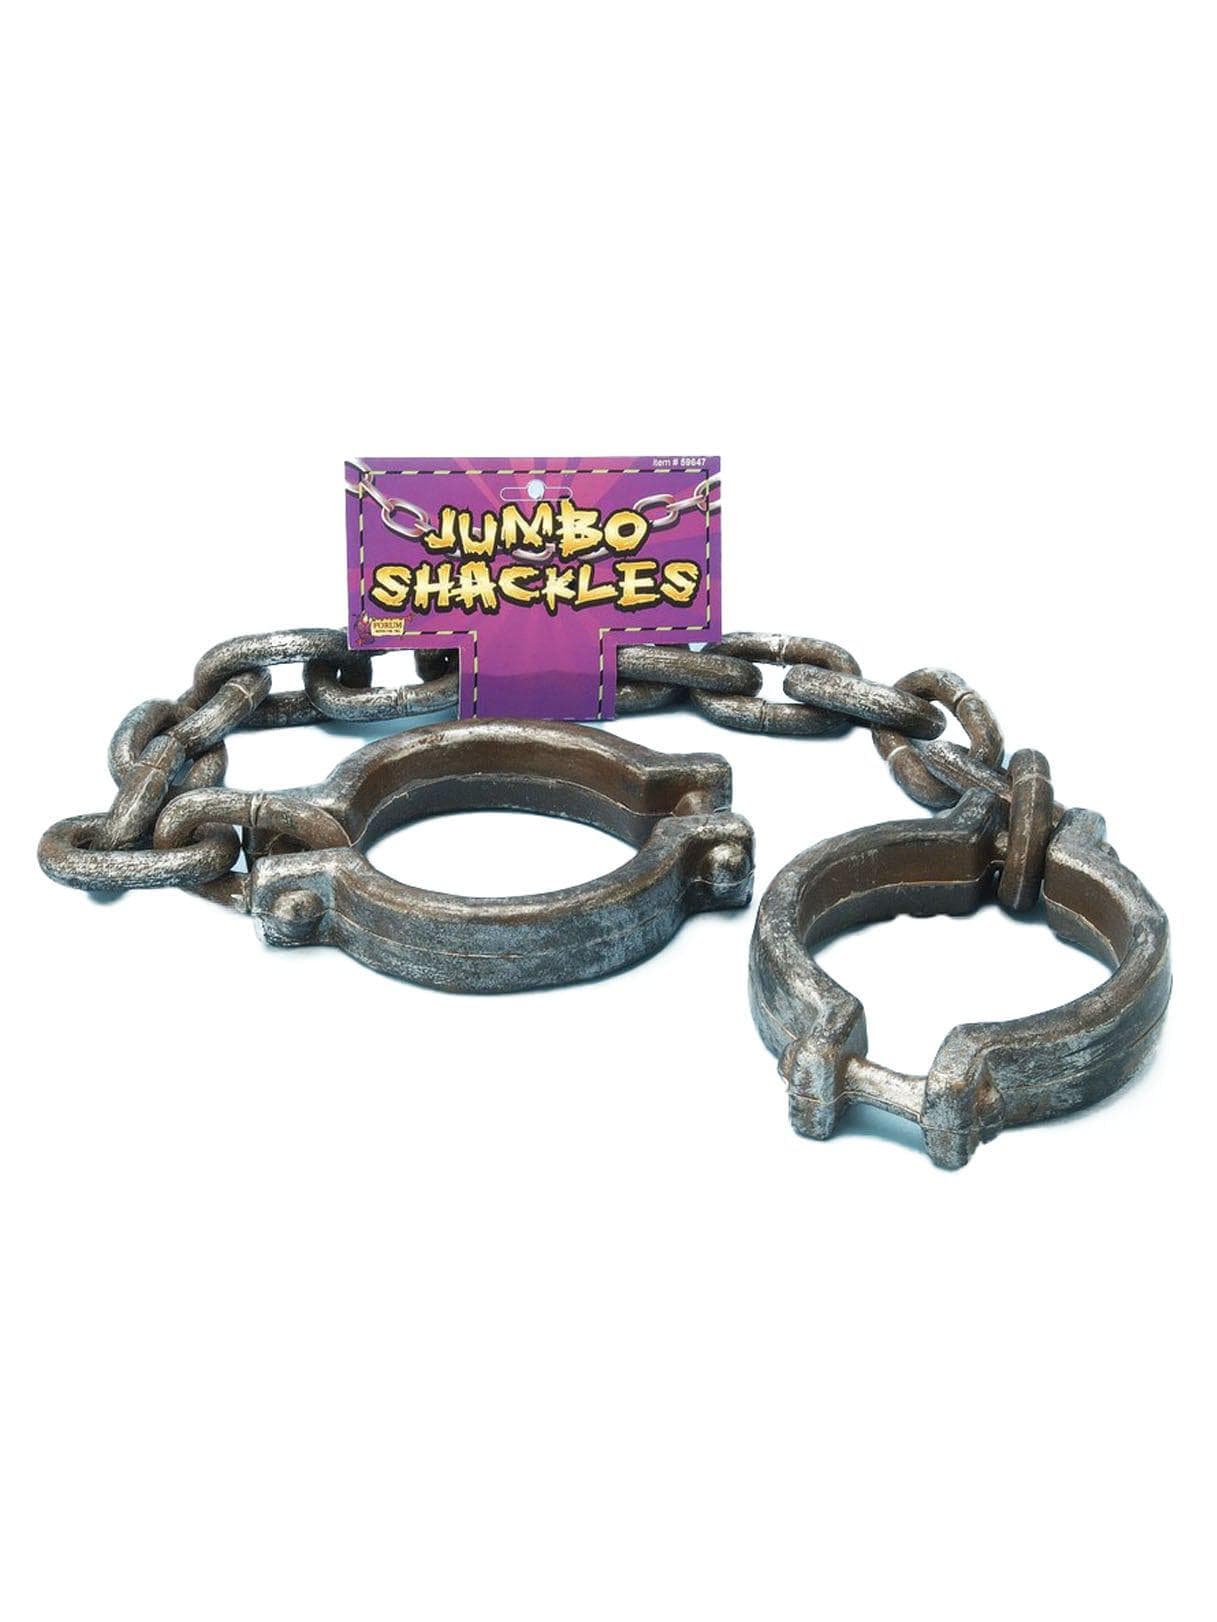 Jumbo Distressed Shackles - costumes.com